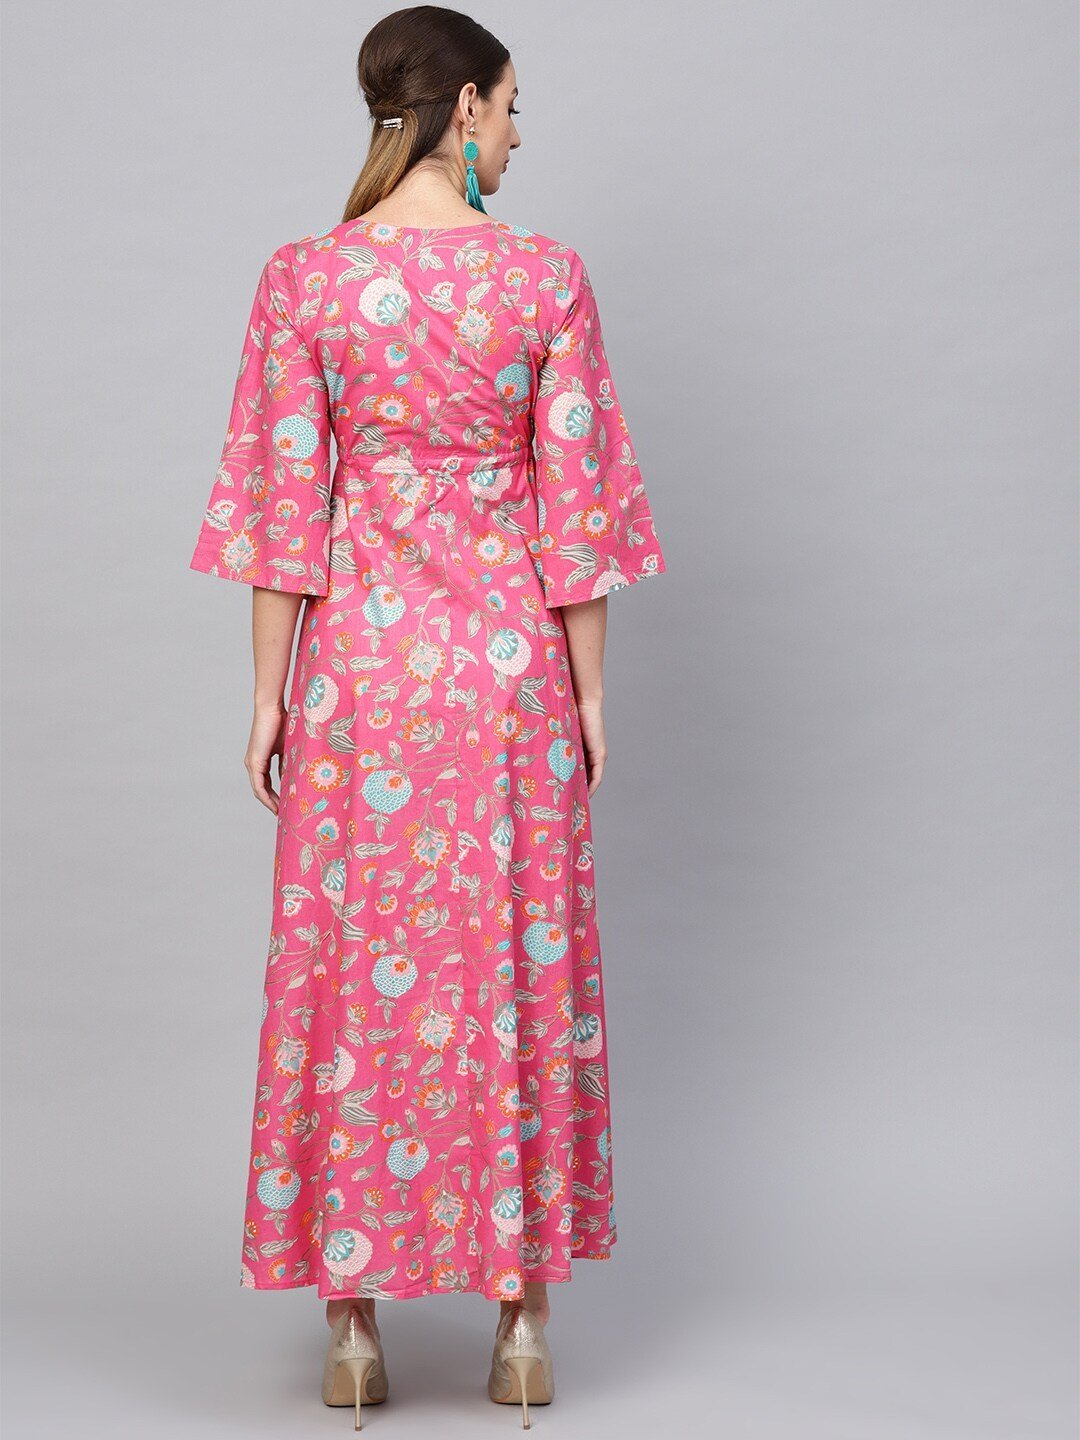 Women's  Printed Pink & Blue Floral Print Maxi Dress - AKS